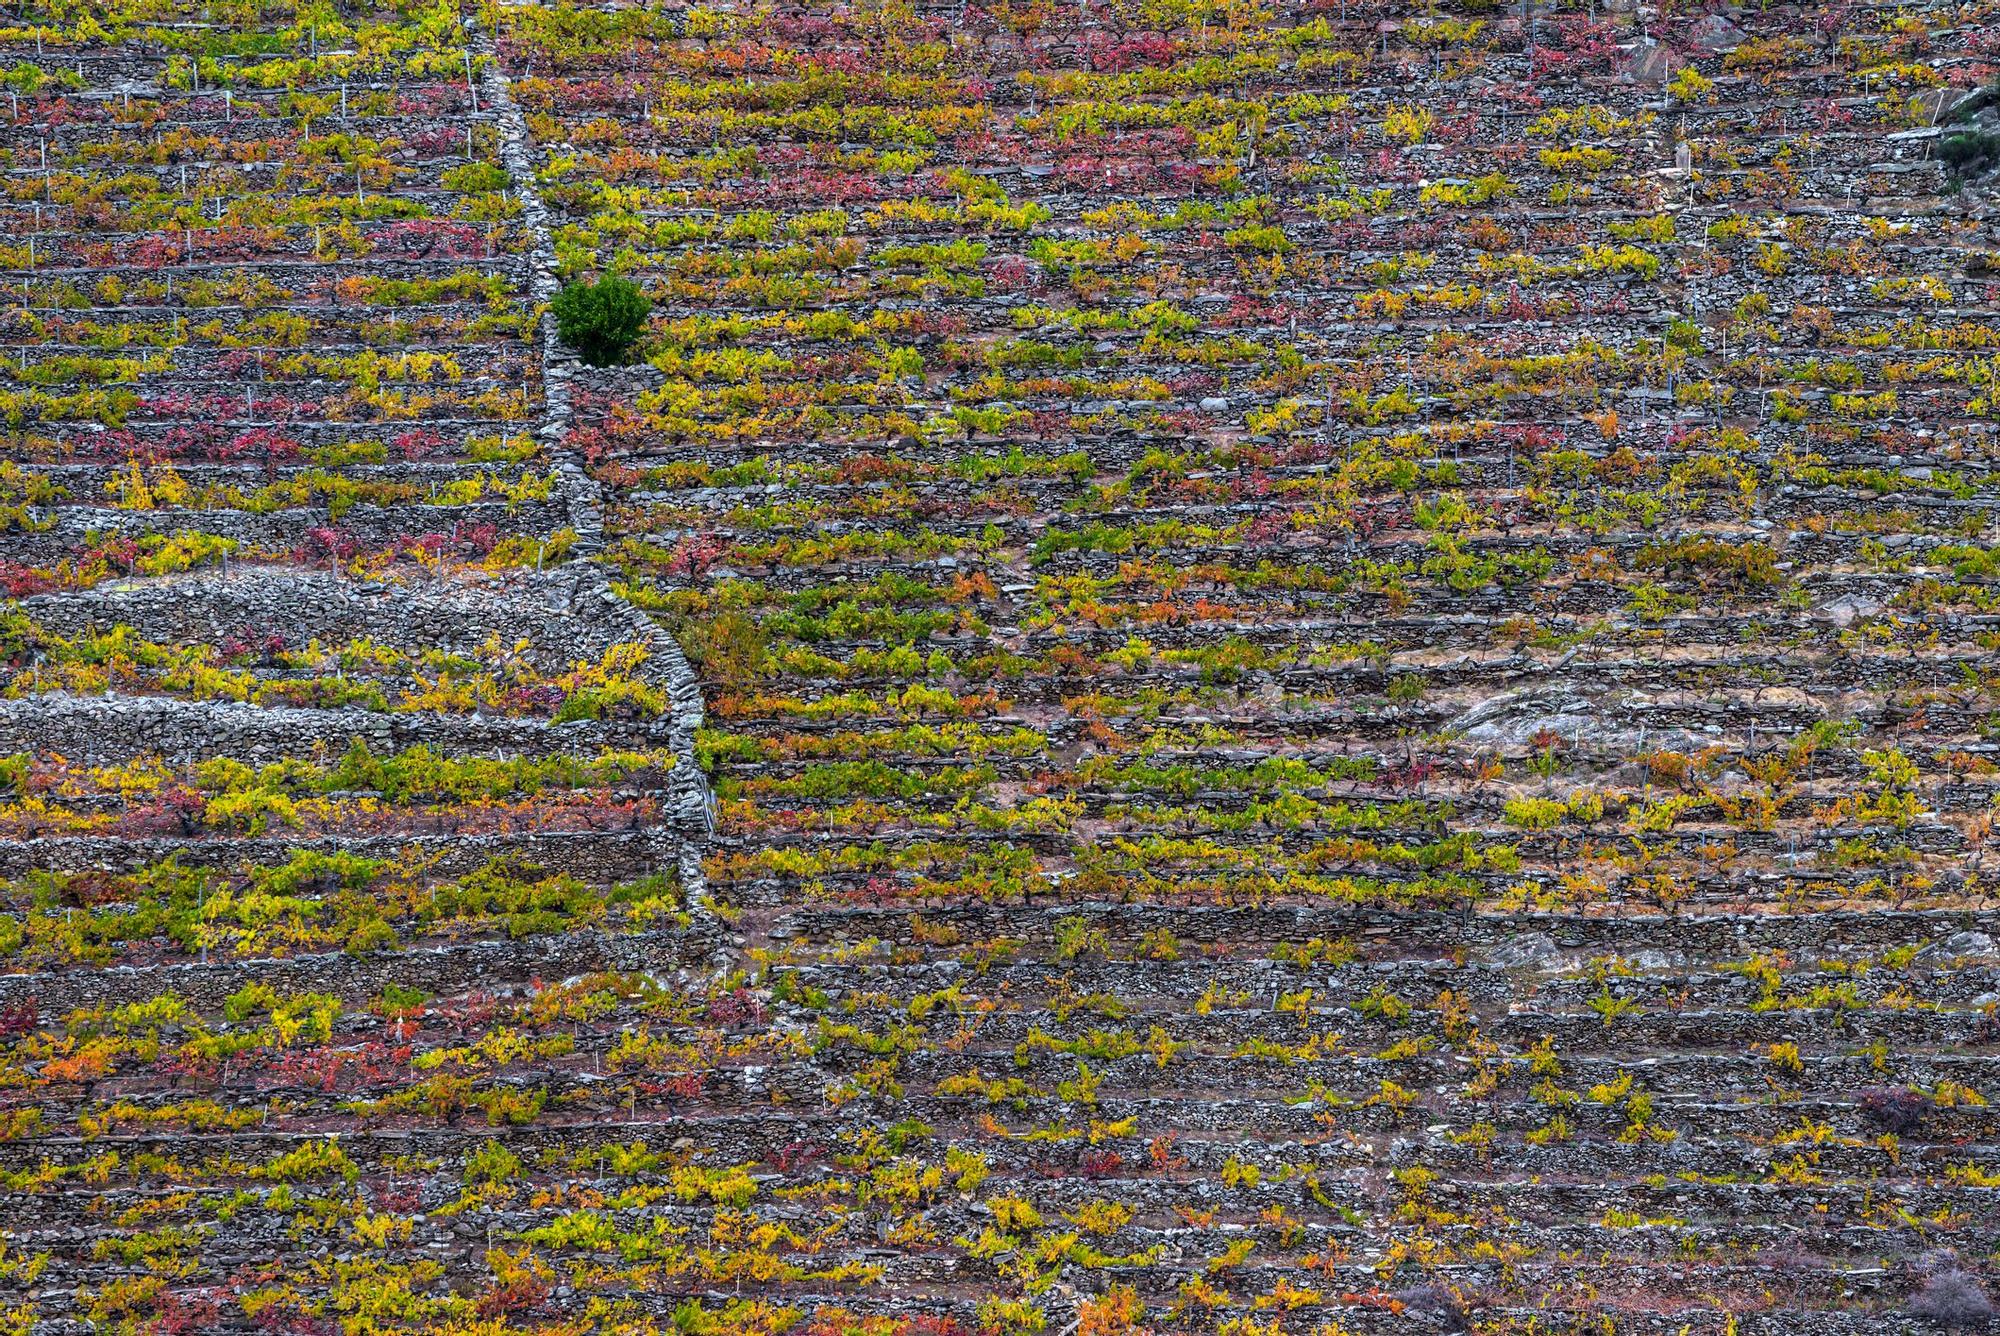 Terrazas de viñedos en la Ribera Sacra